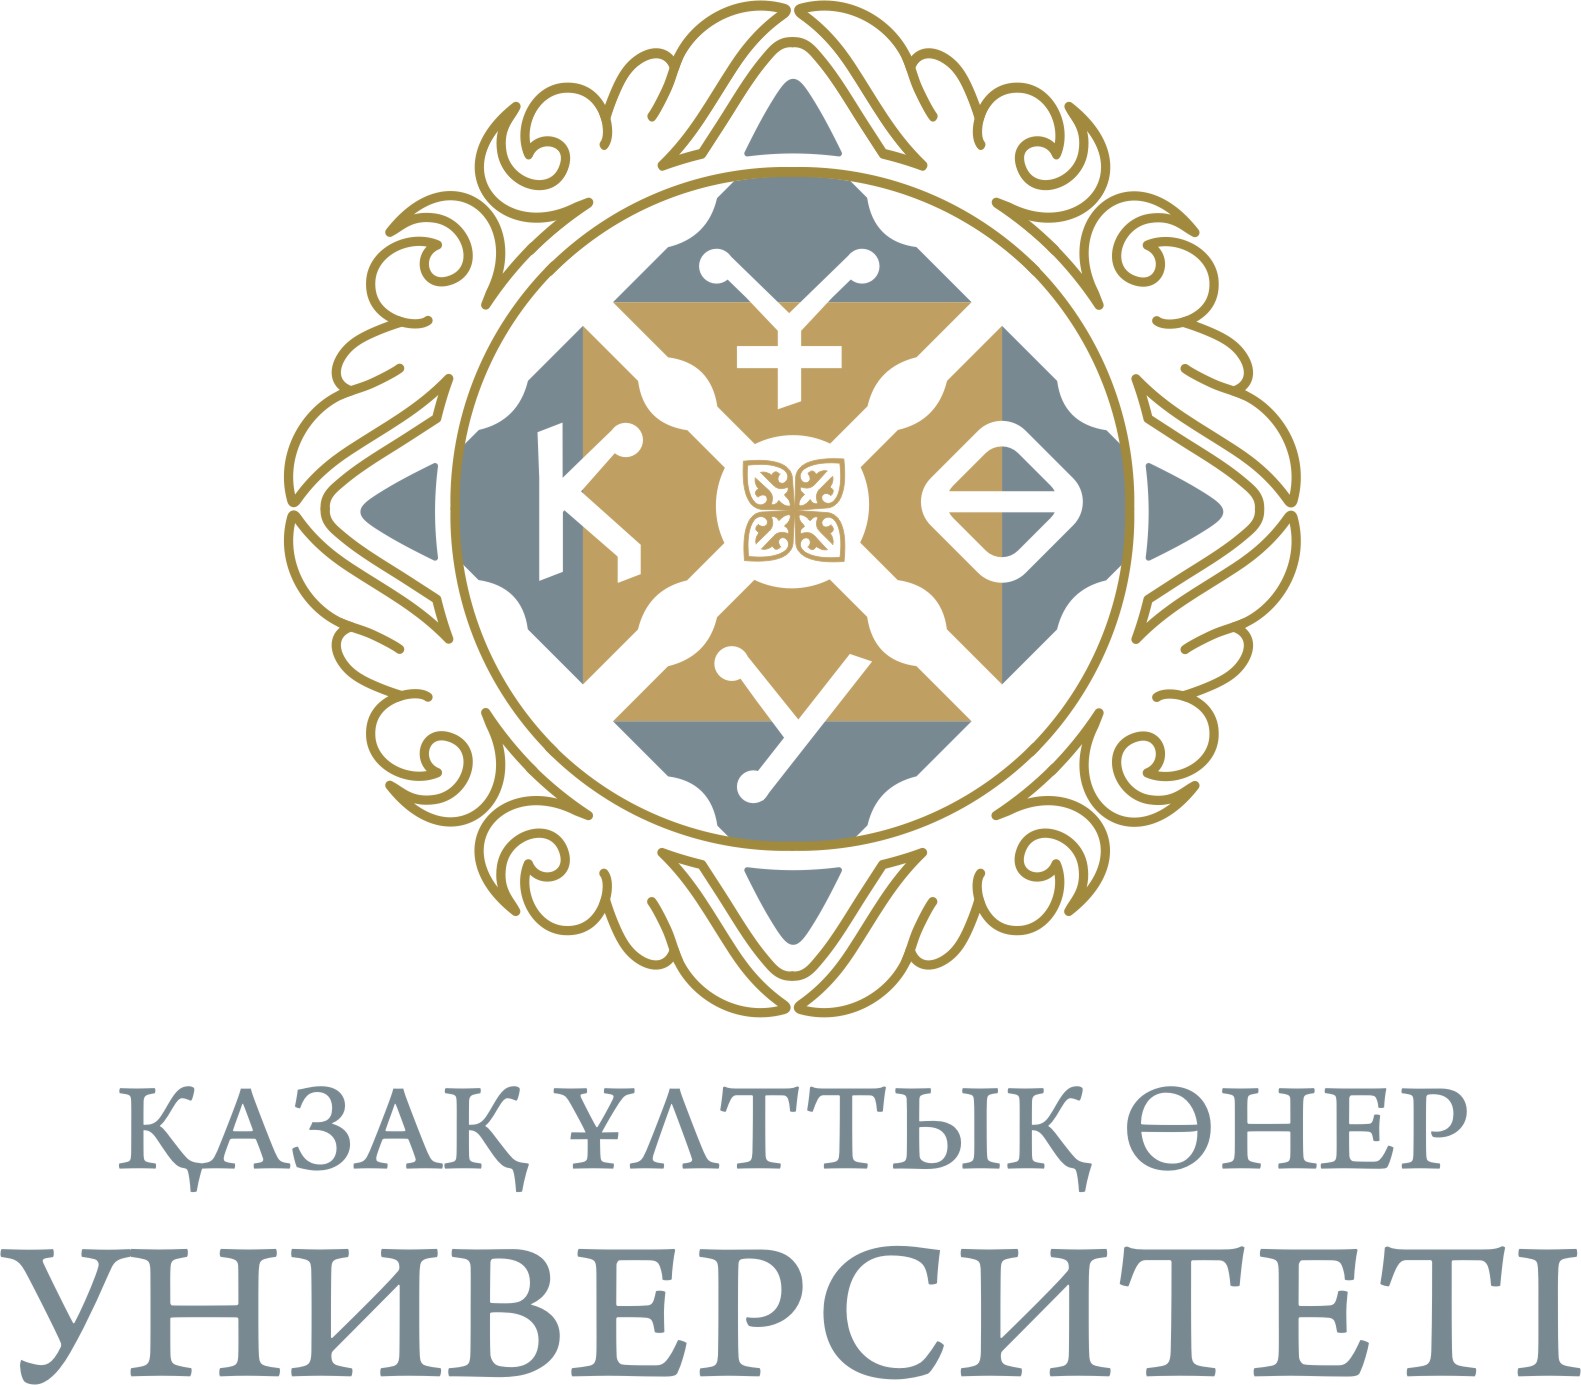 Kazakh National University of Arts